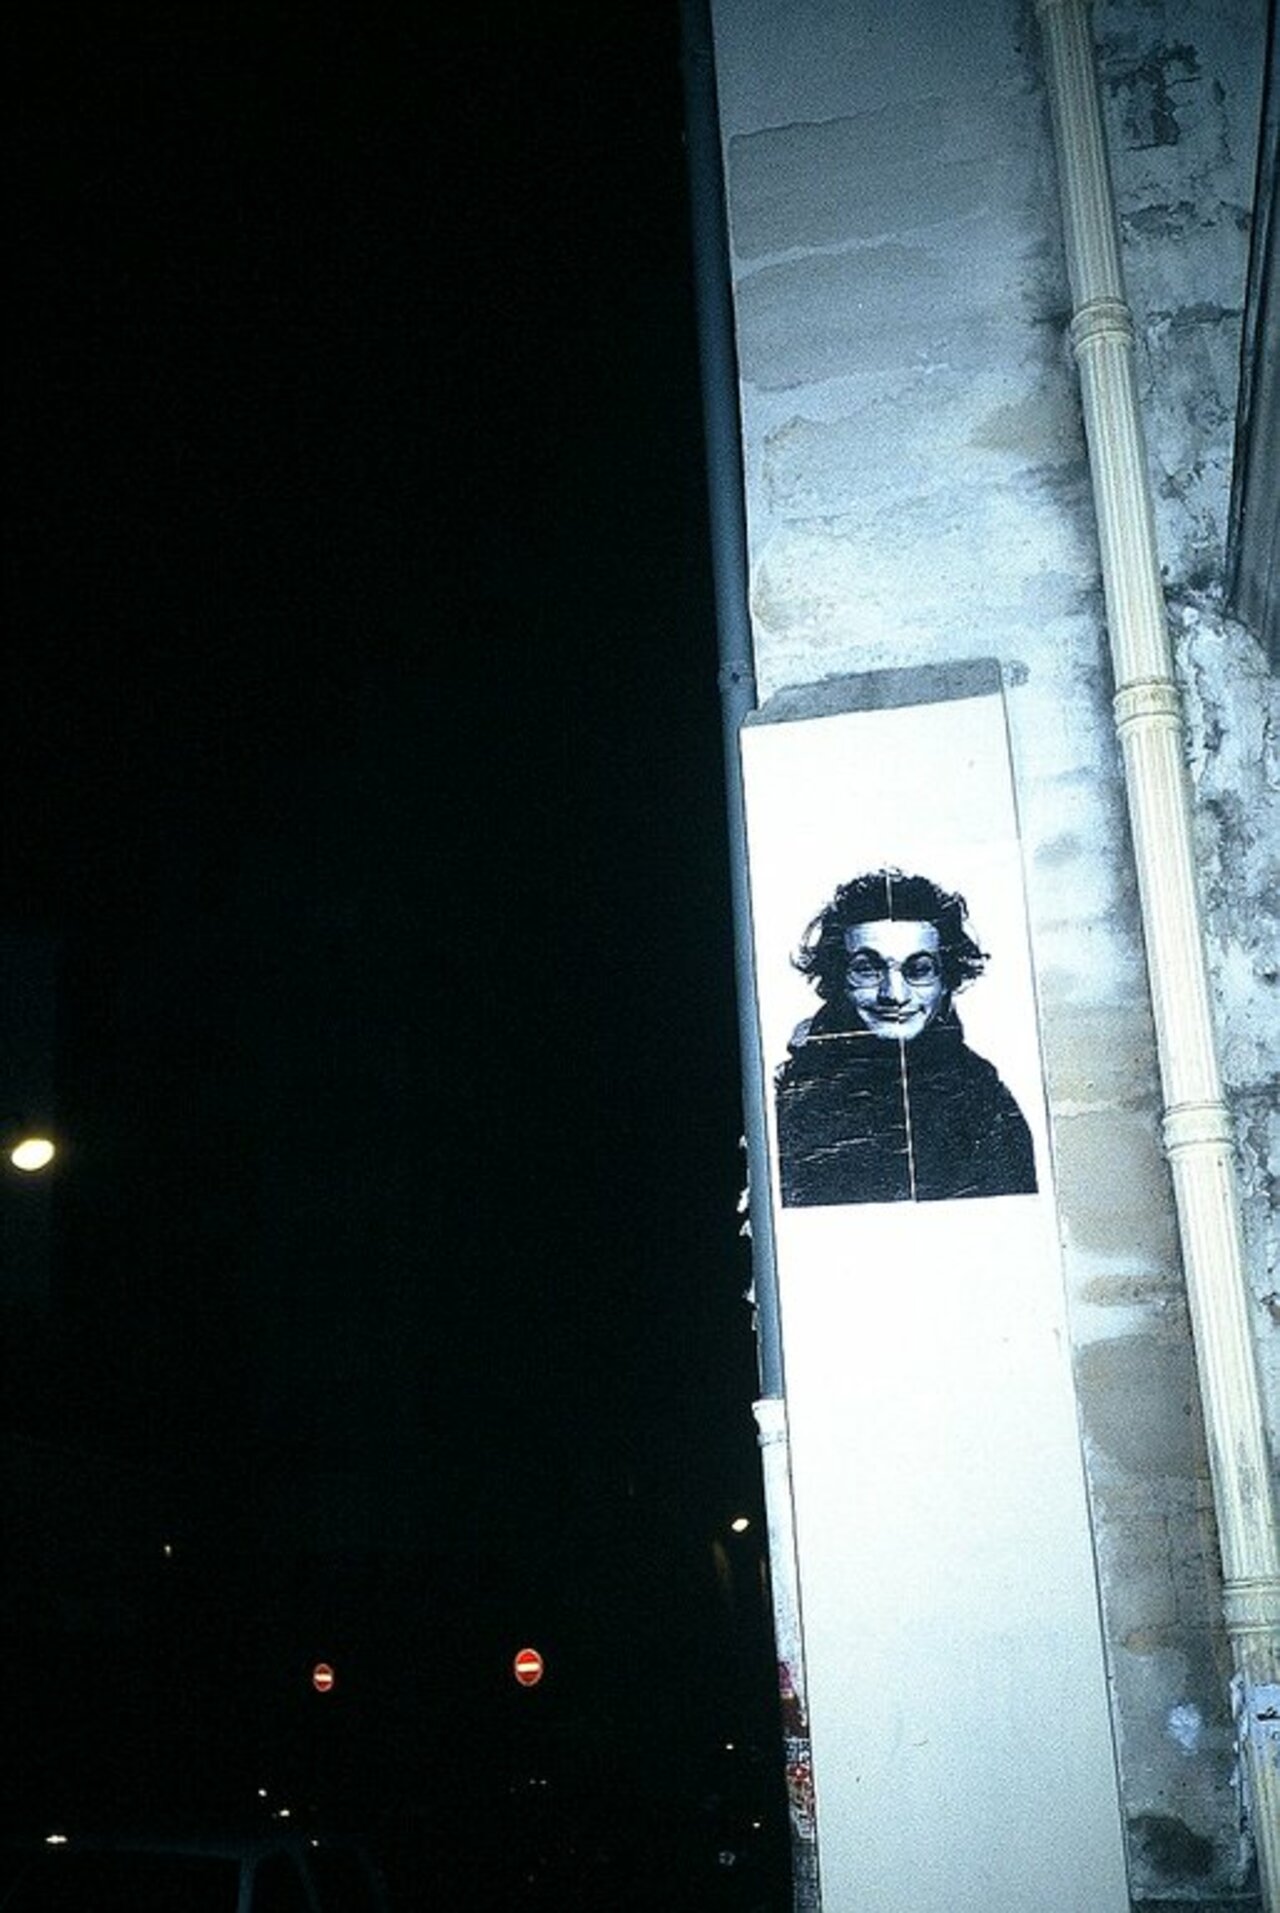 Street Art by Nojnoma in # http://www.urbacolors.com #art #mural #graffiti #streetart https://t.co/Qq81RHKryK